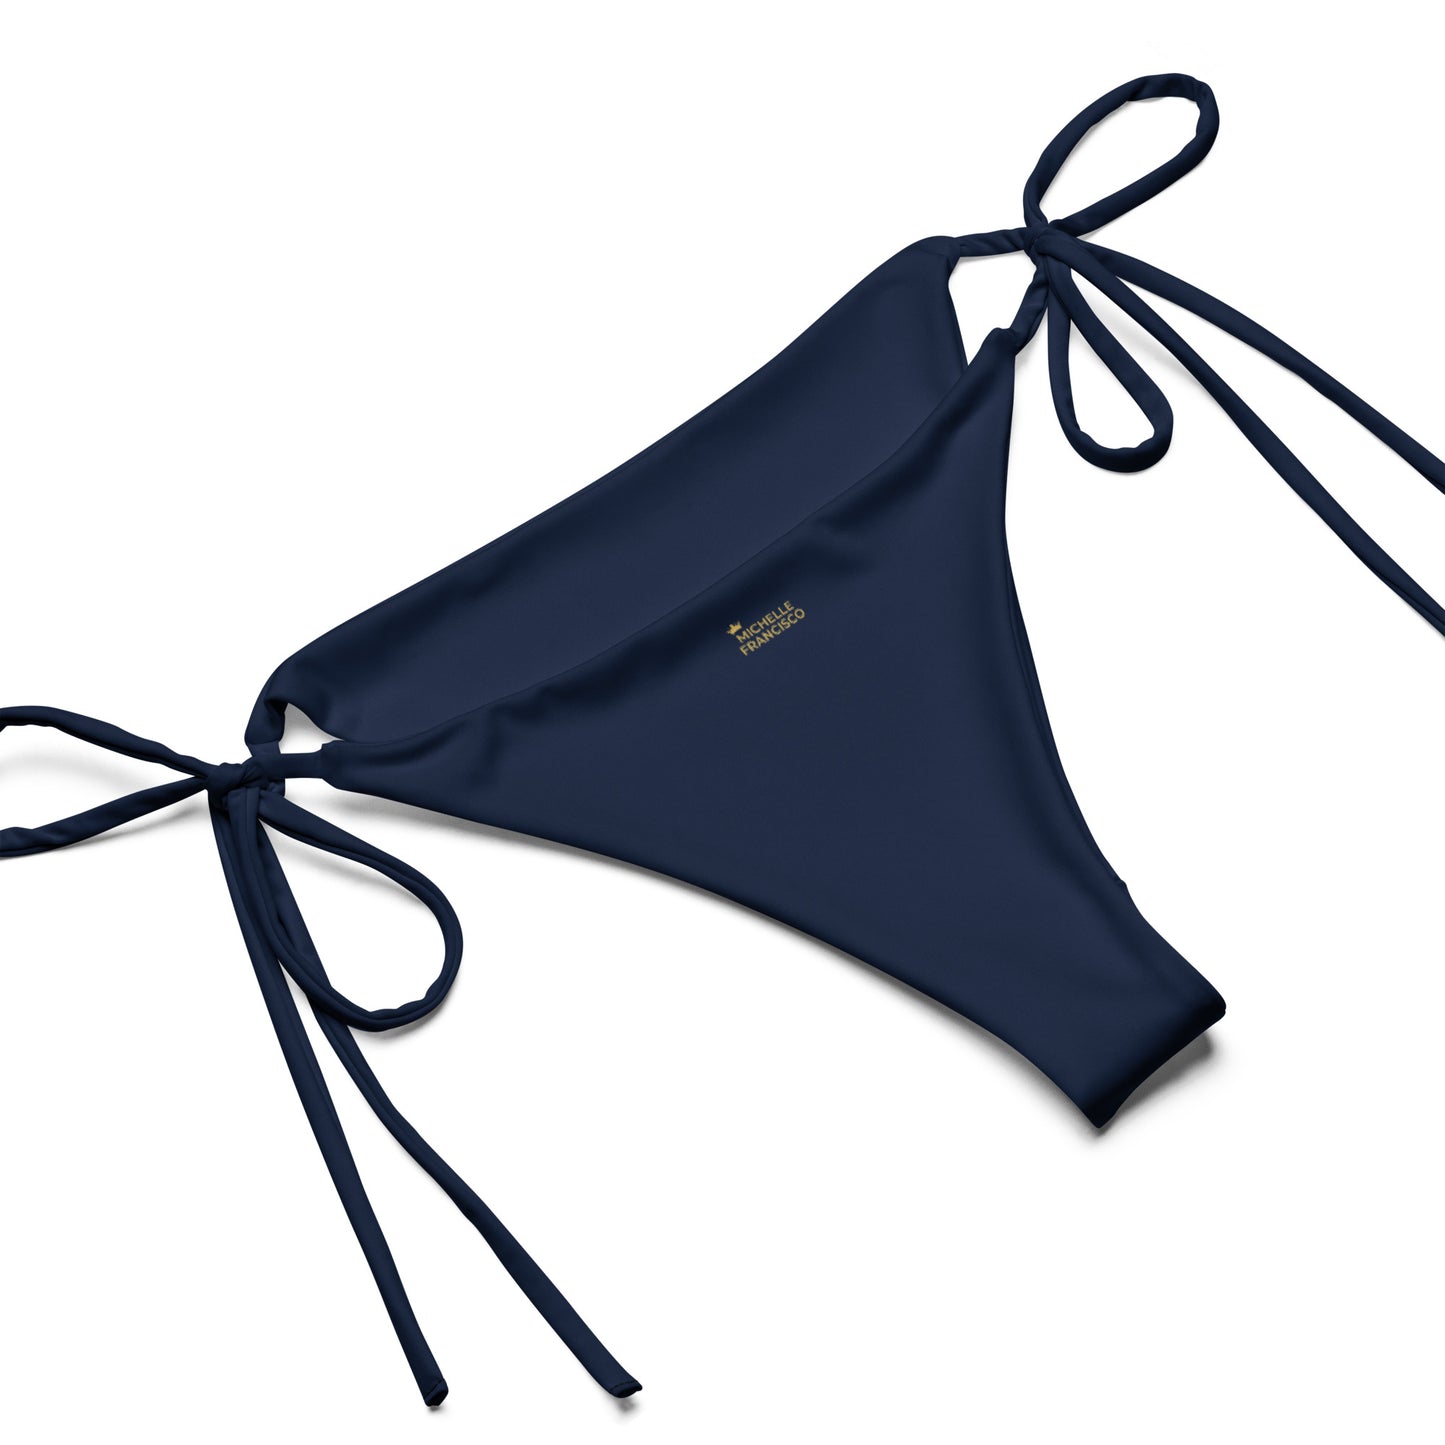 Navy String Bikini